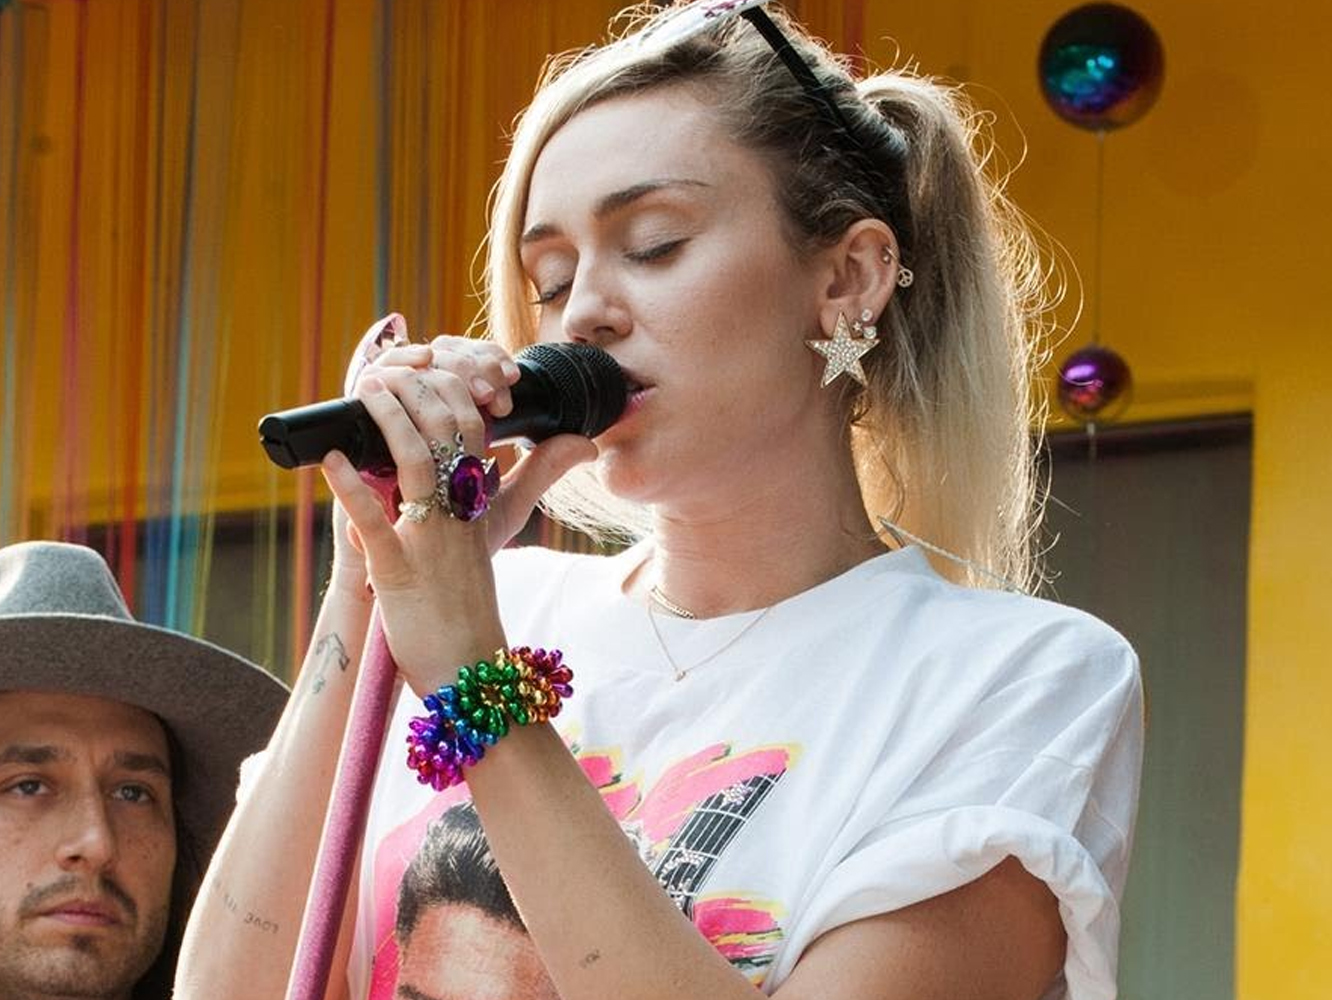  Millennial Faith Hill, Miley Cyrus, recicla sus hits al country en el Live Lounge